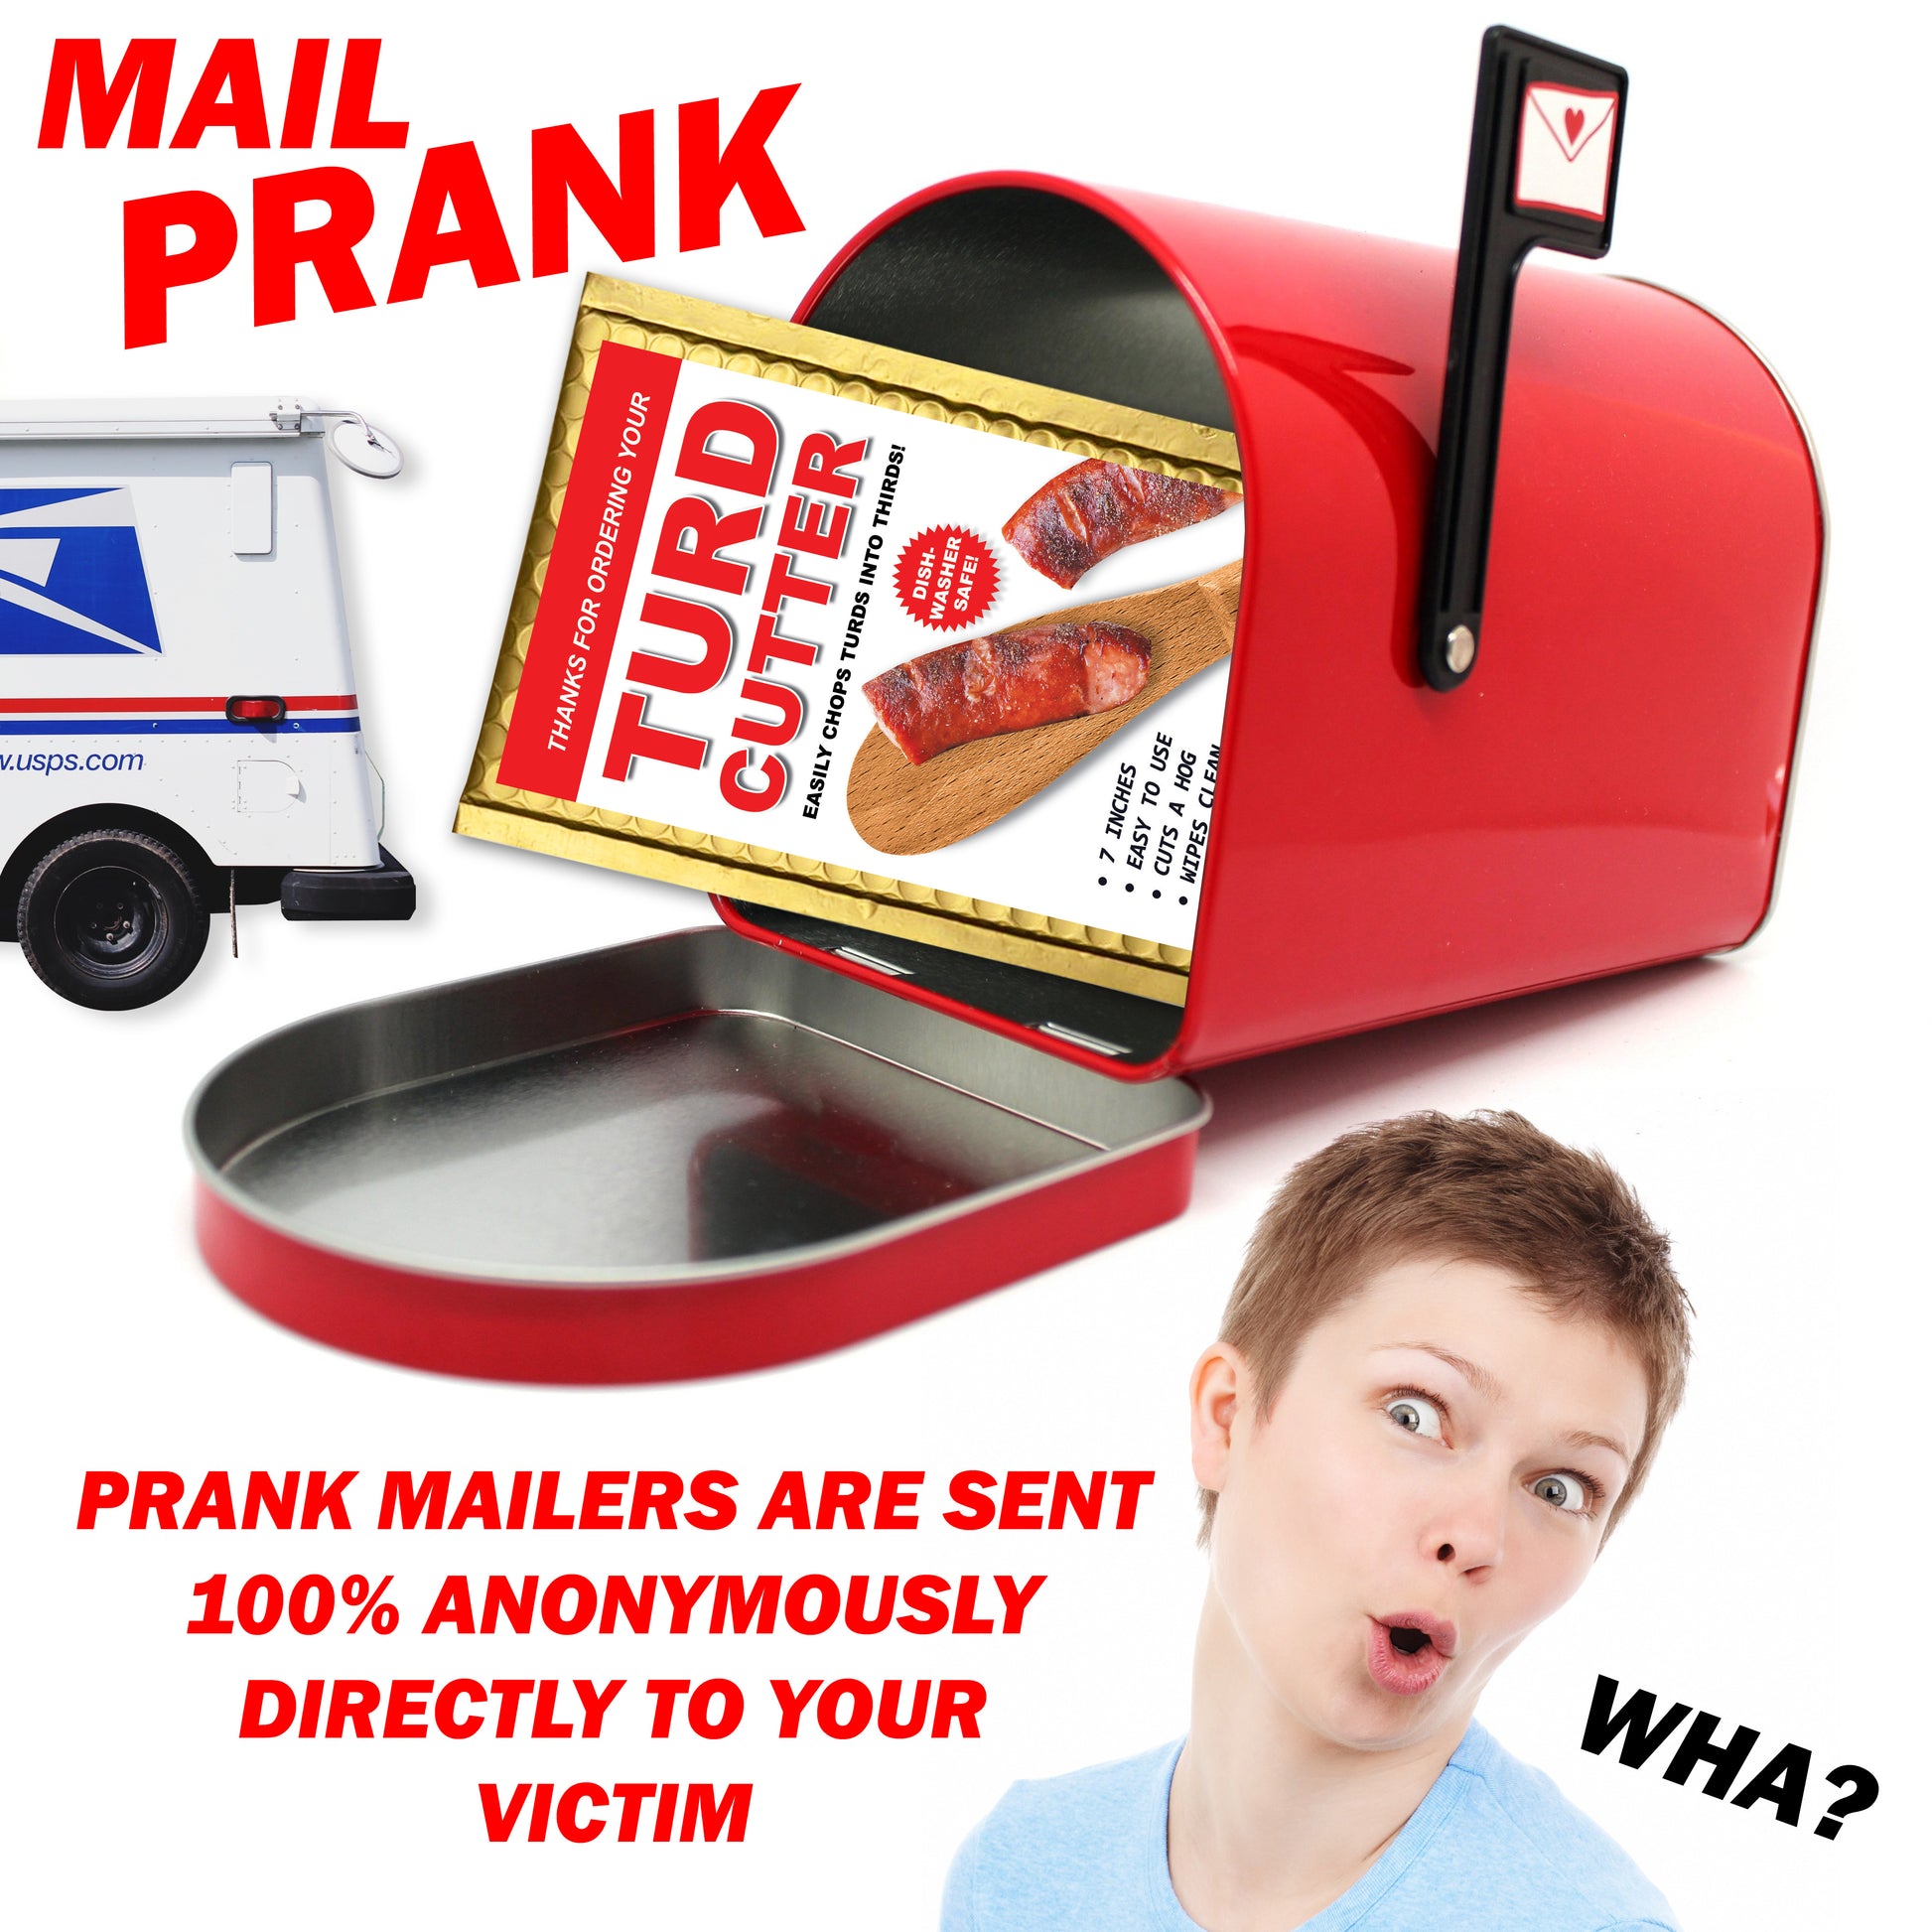 Turd Prank Mail Joke